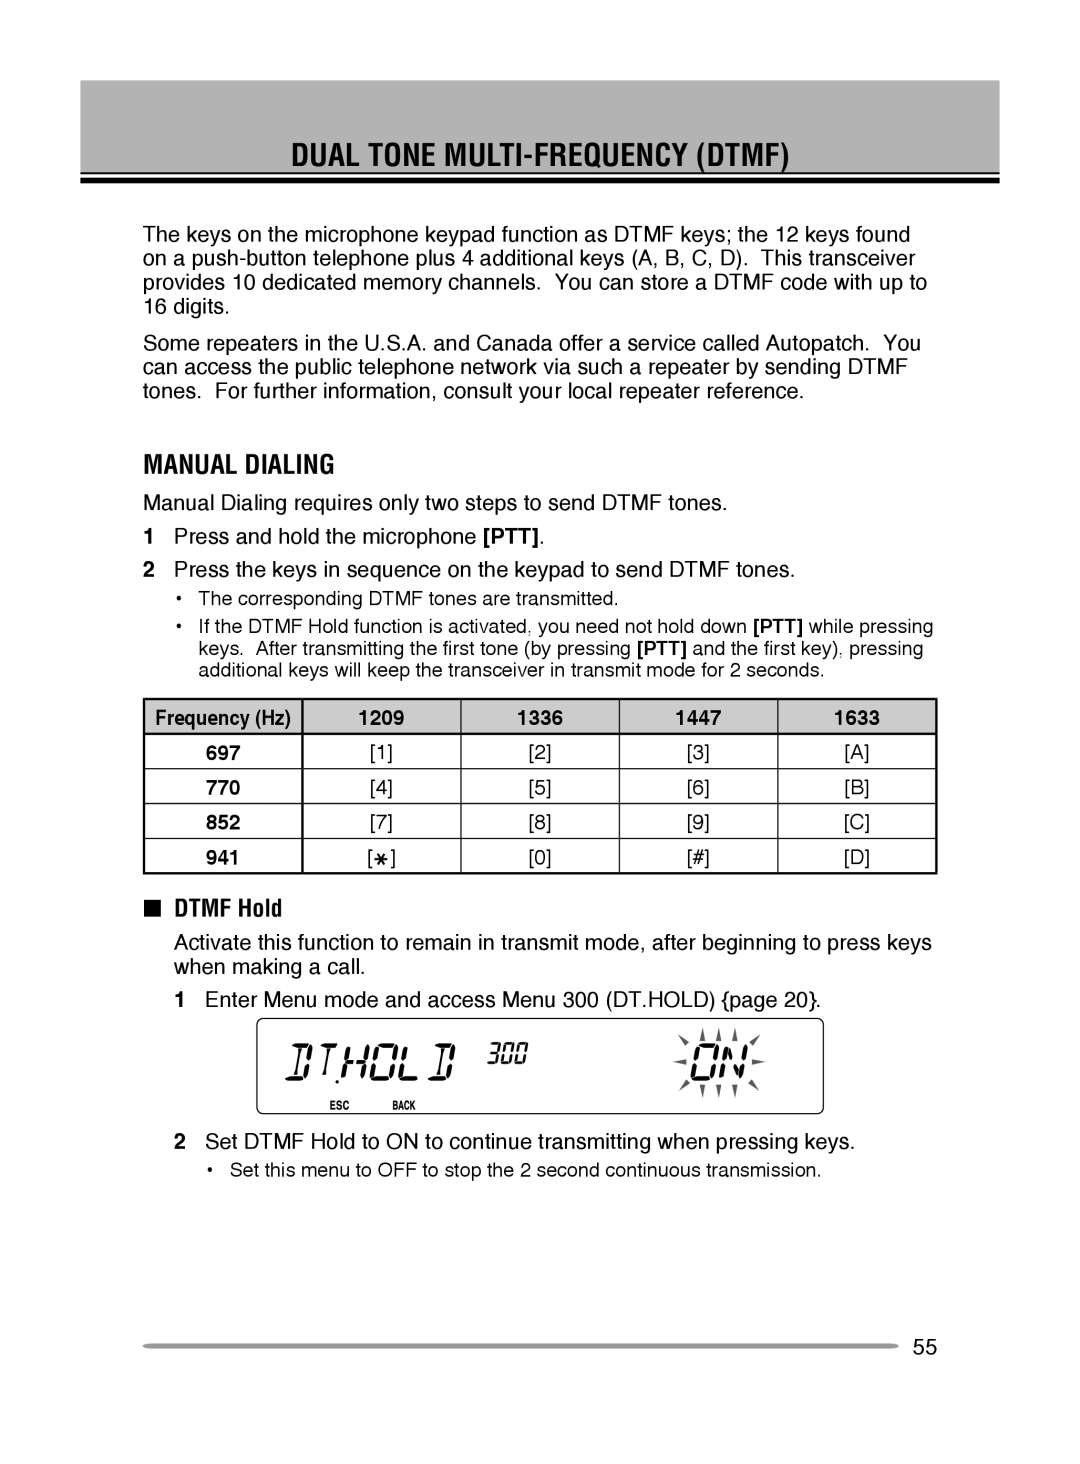 Kenwood TM-V71A, TM-V71E instruction manual Dual Tone Multi-Frequencydtmf, Manual Dialing, nDTMF Hold 